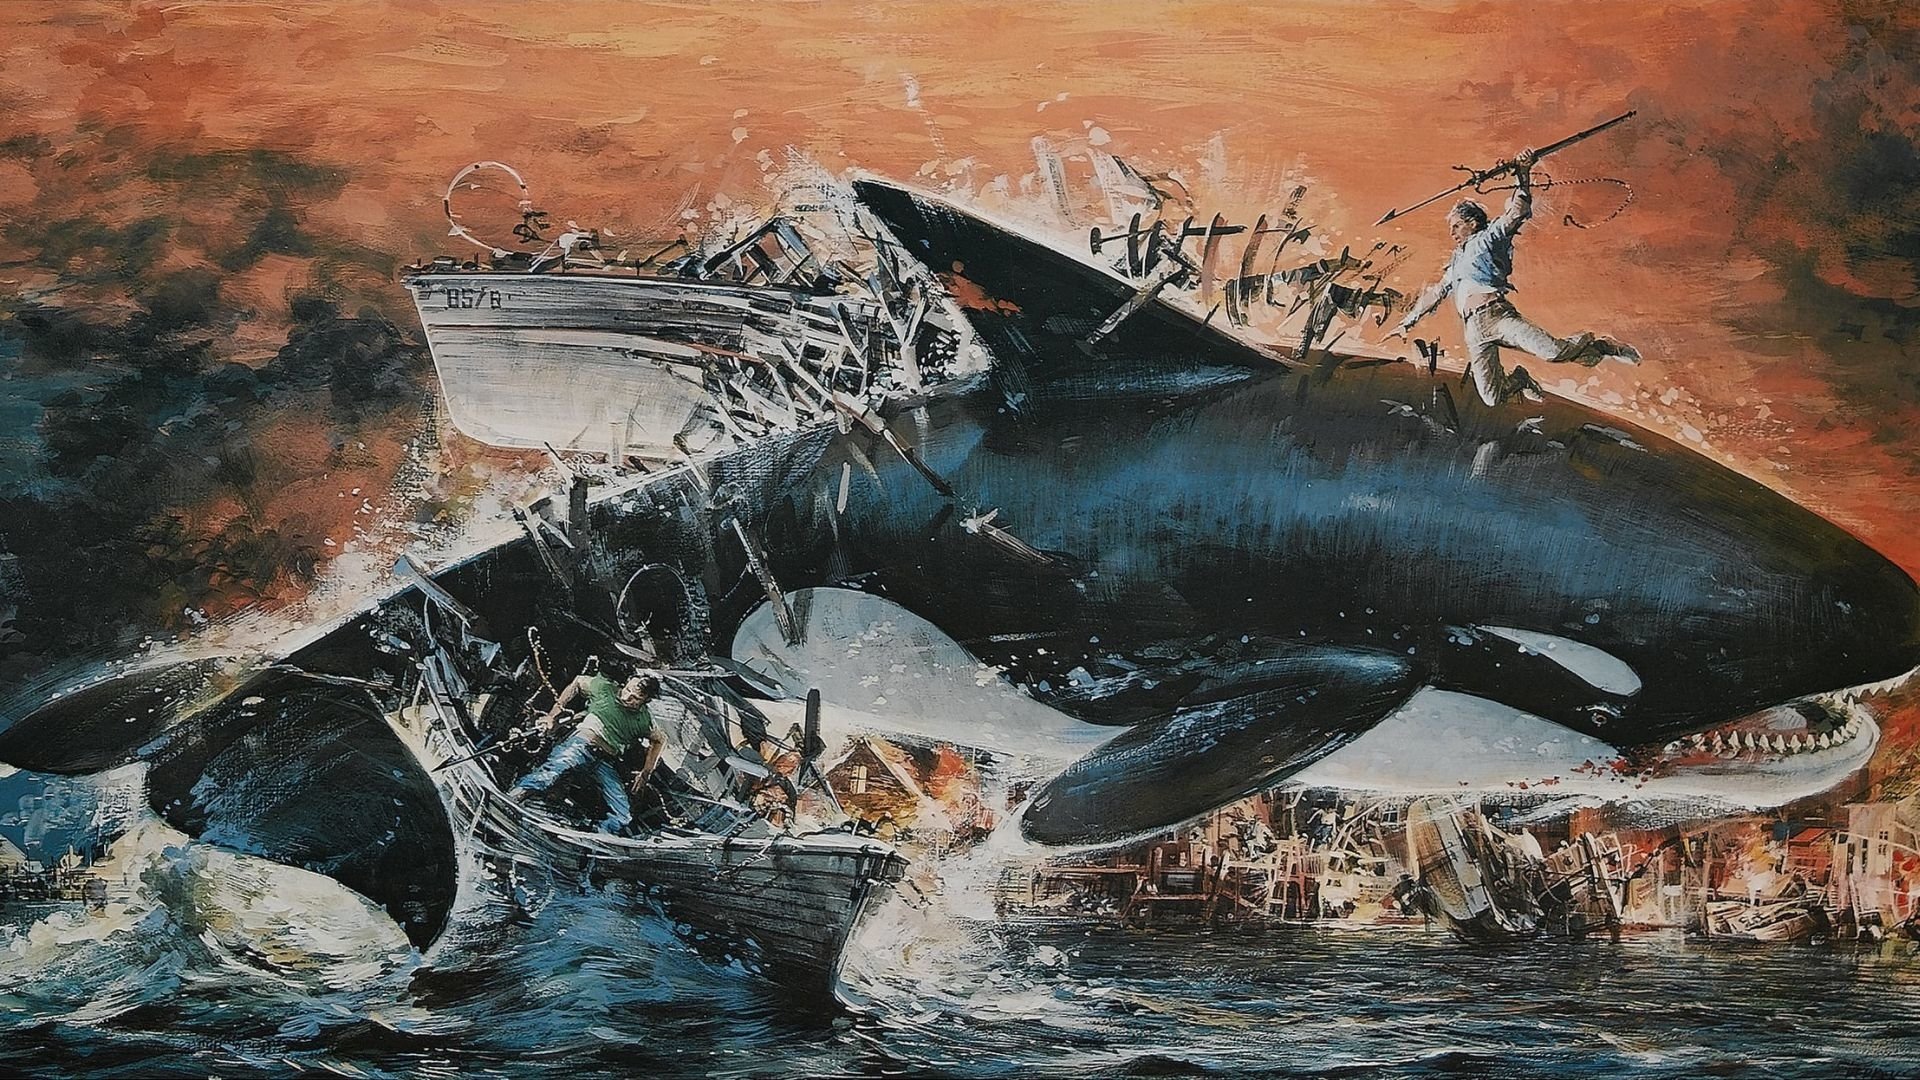 Orca Killer Whale Poster - HD Wallpaper 